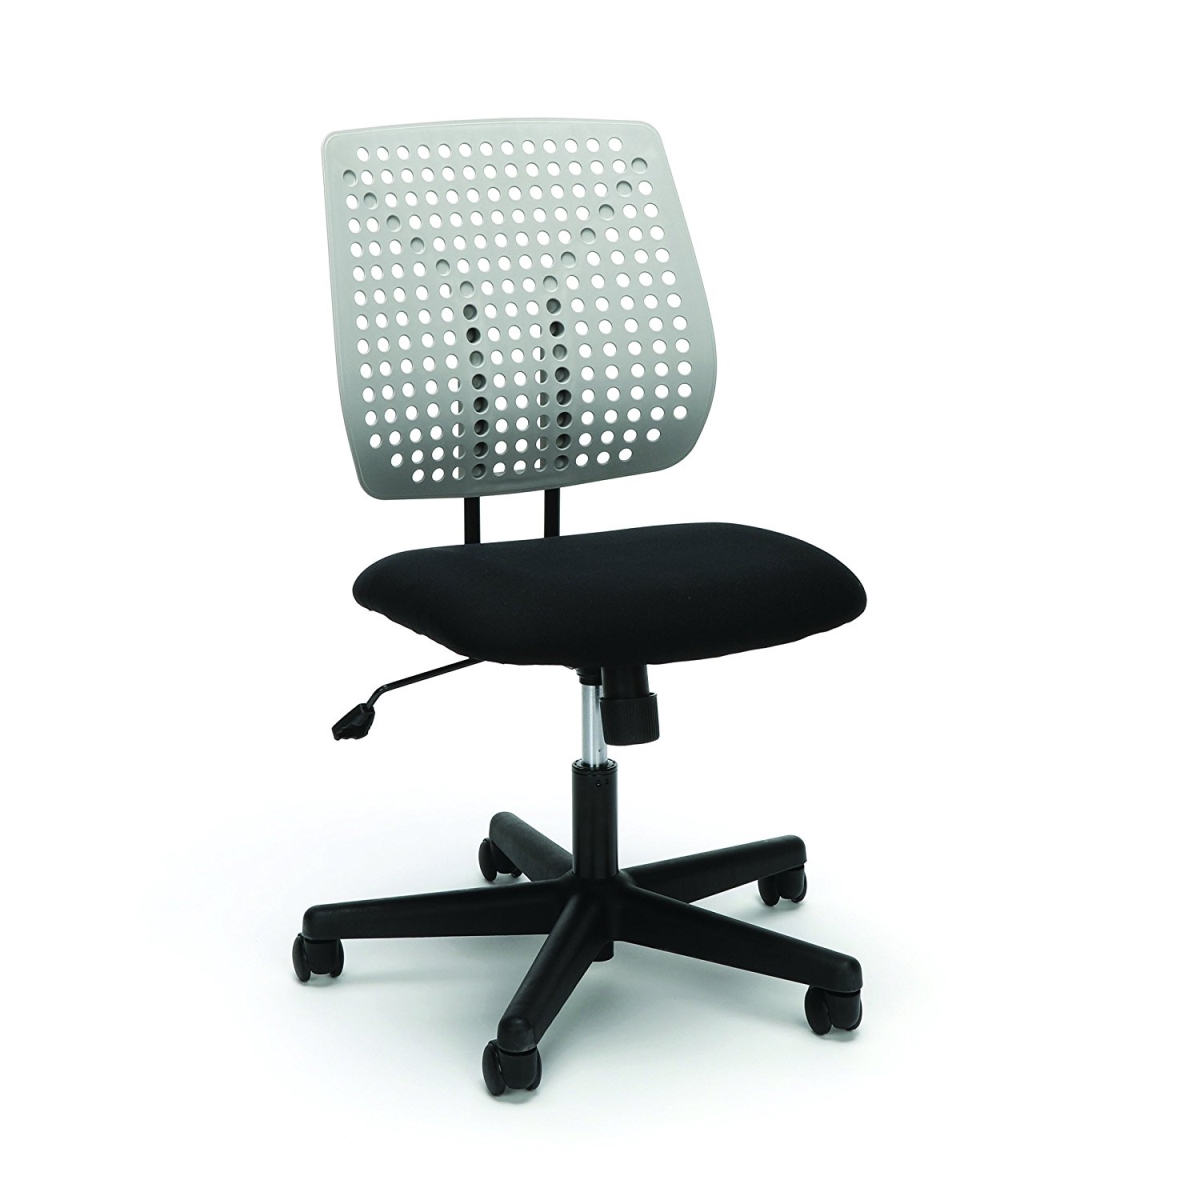 Ess-2050-blk-gry Ess-2050 Model Essentials Model Plastic Back Task Chair, Black & Grey